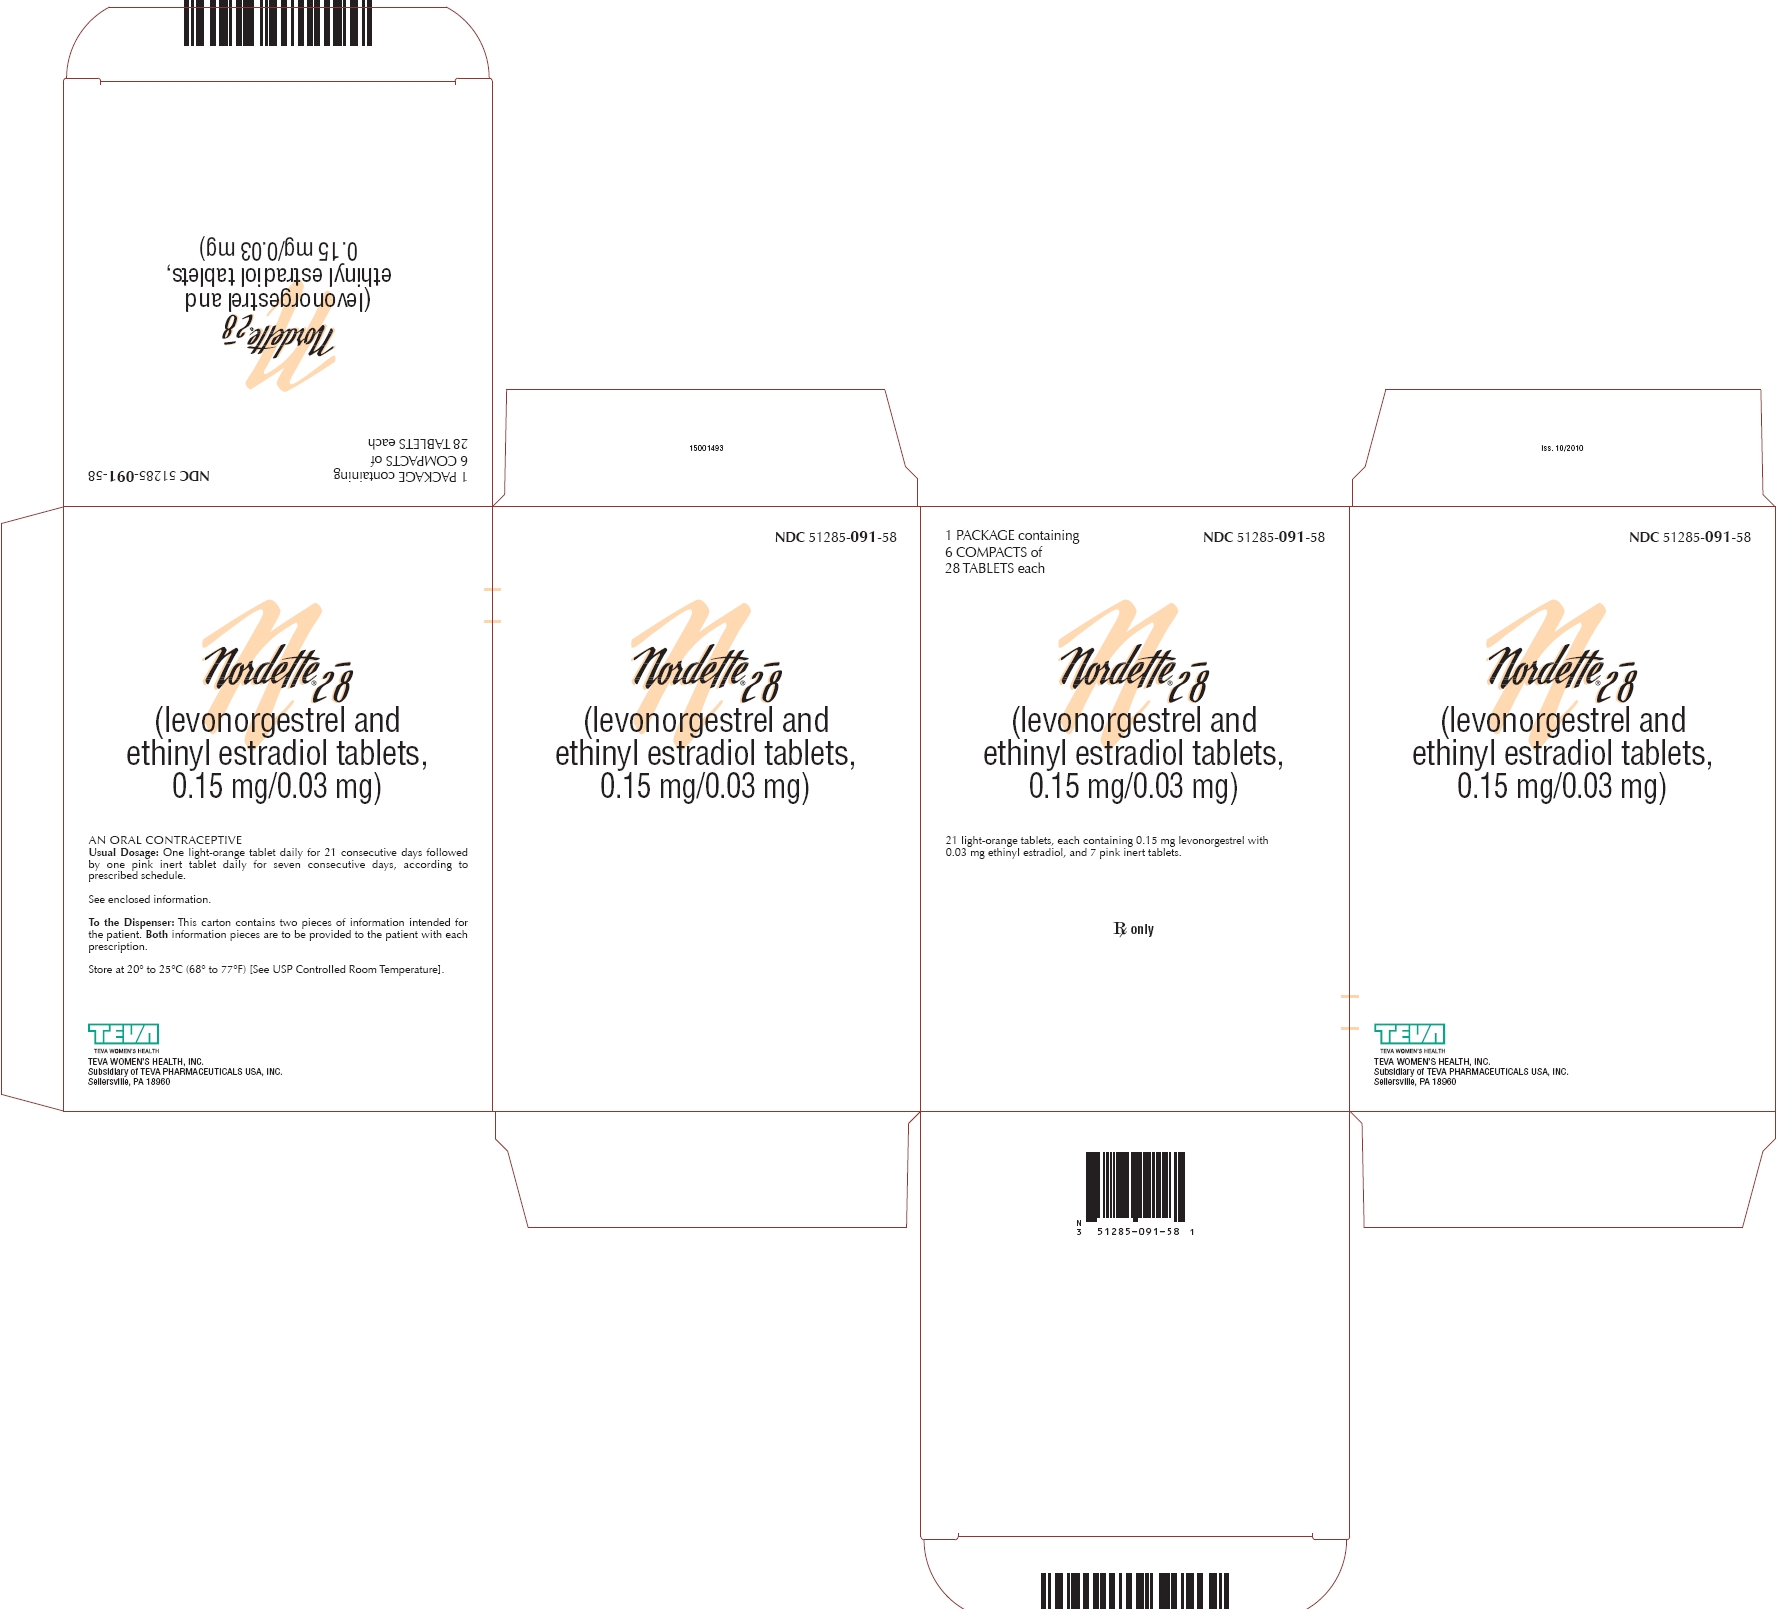 Nordette 28 (levonorgestrel and ethinyl estradiol tablets) carton label